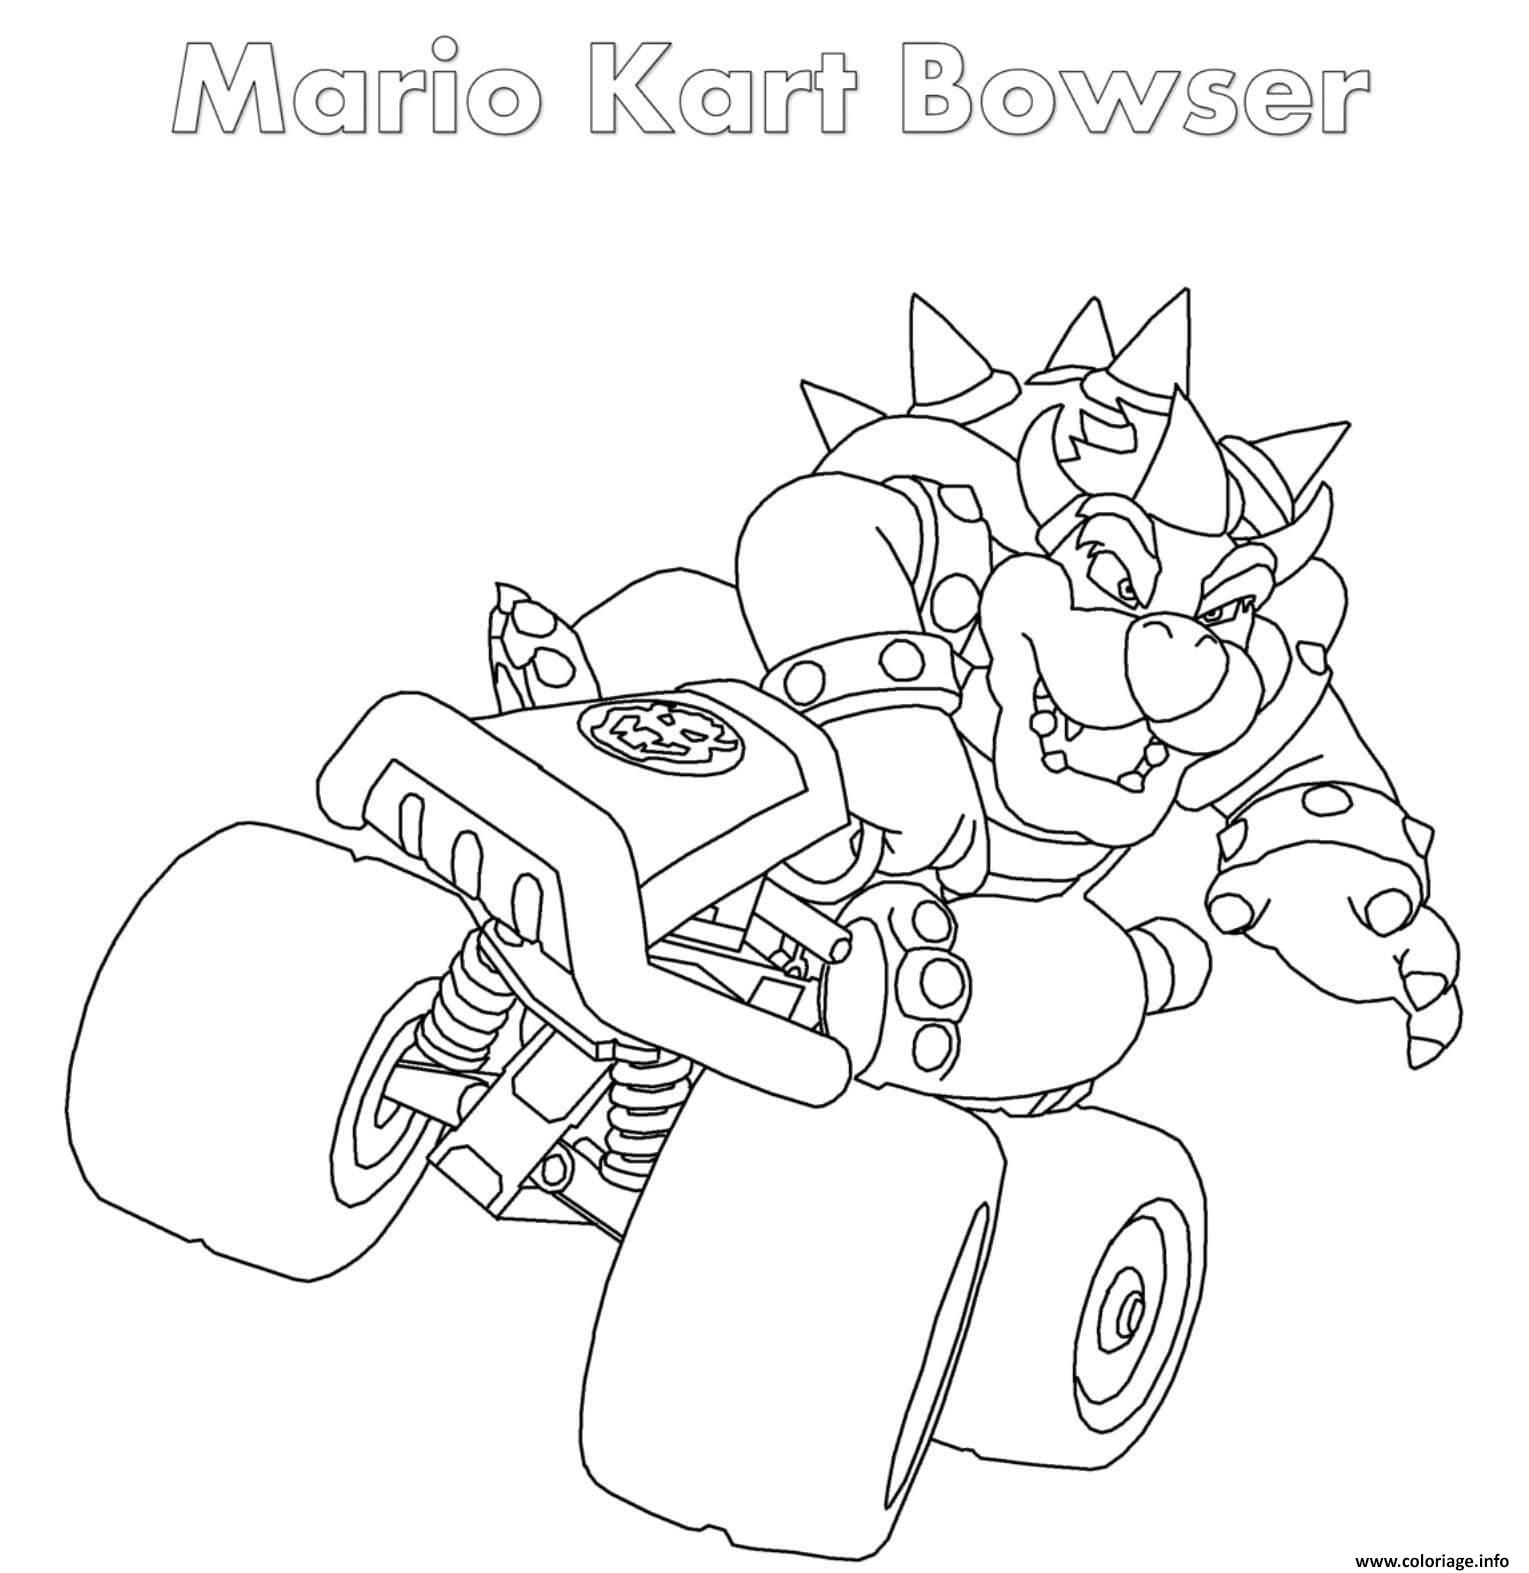 Coloriage Bowser Mario Kart Dessin à Imprimer